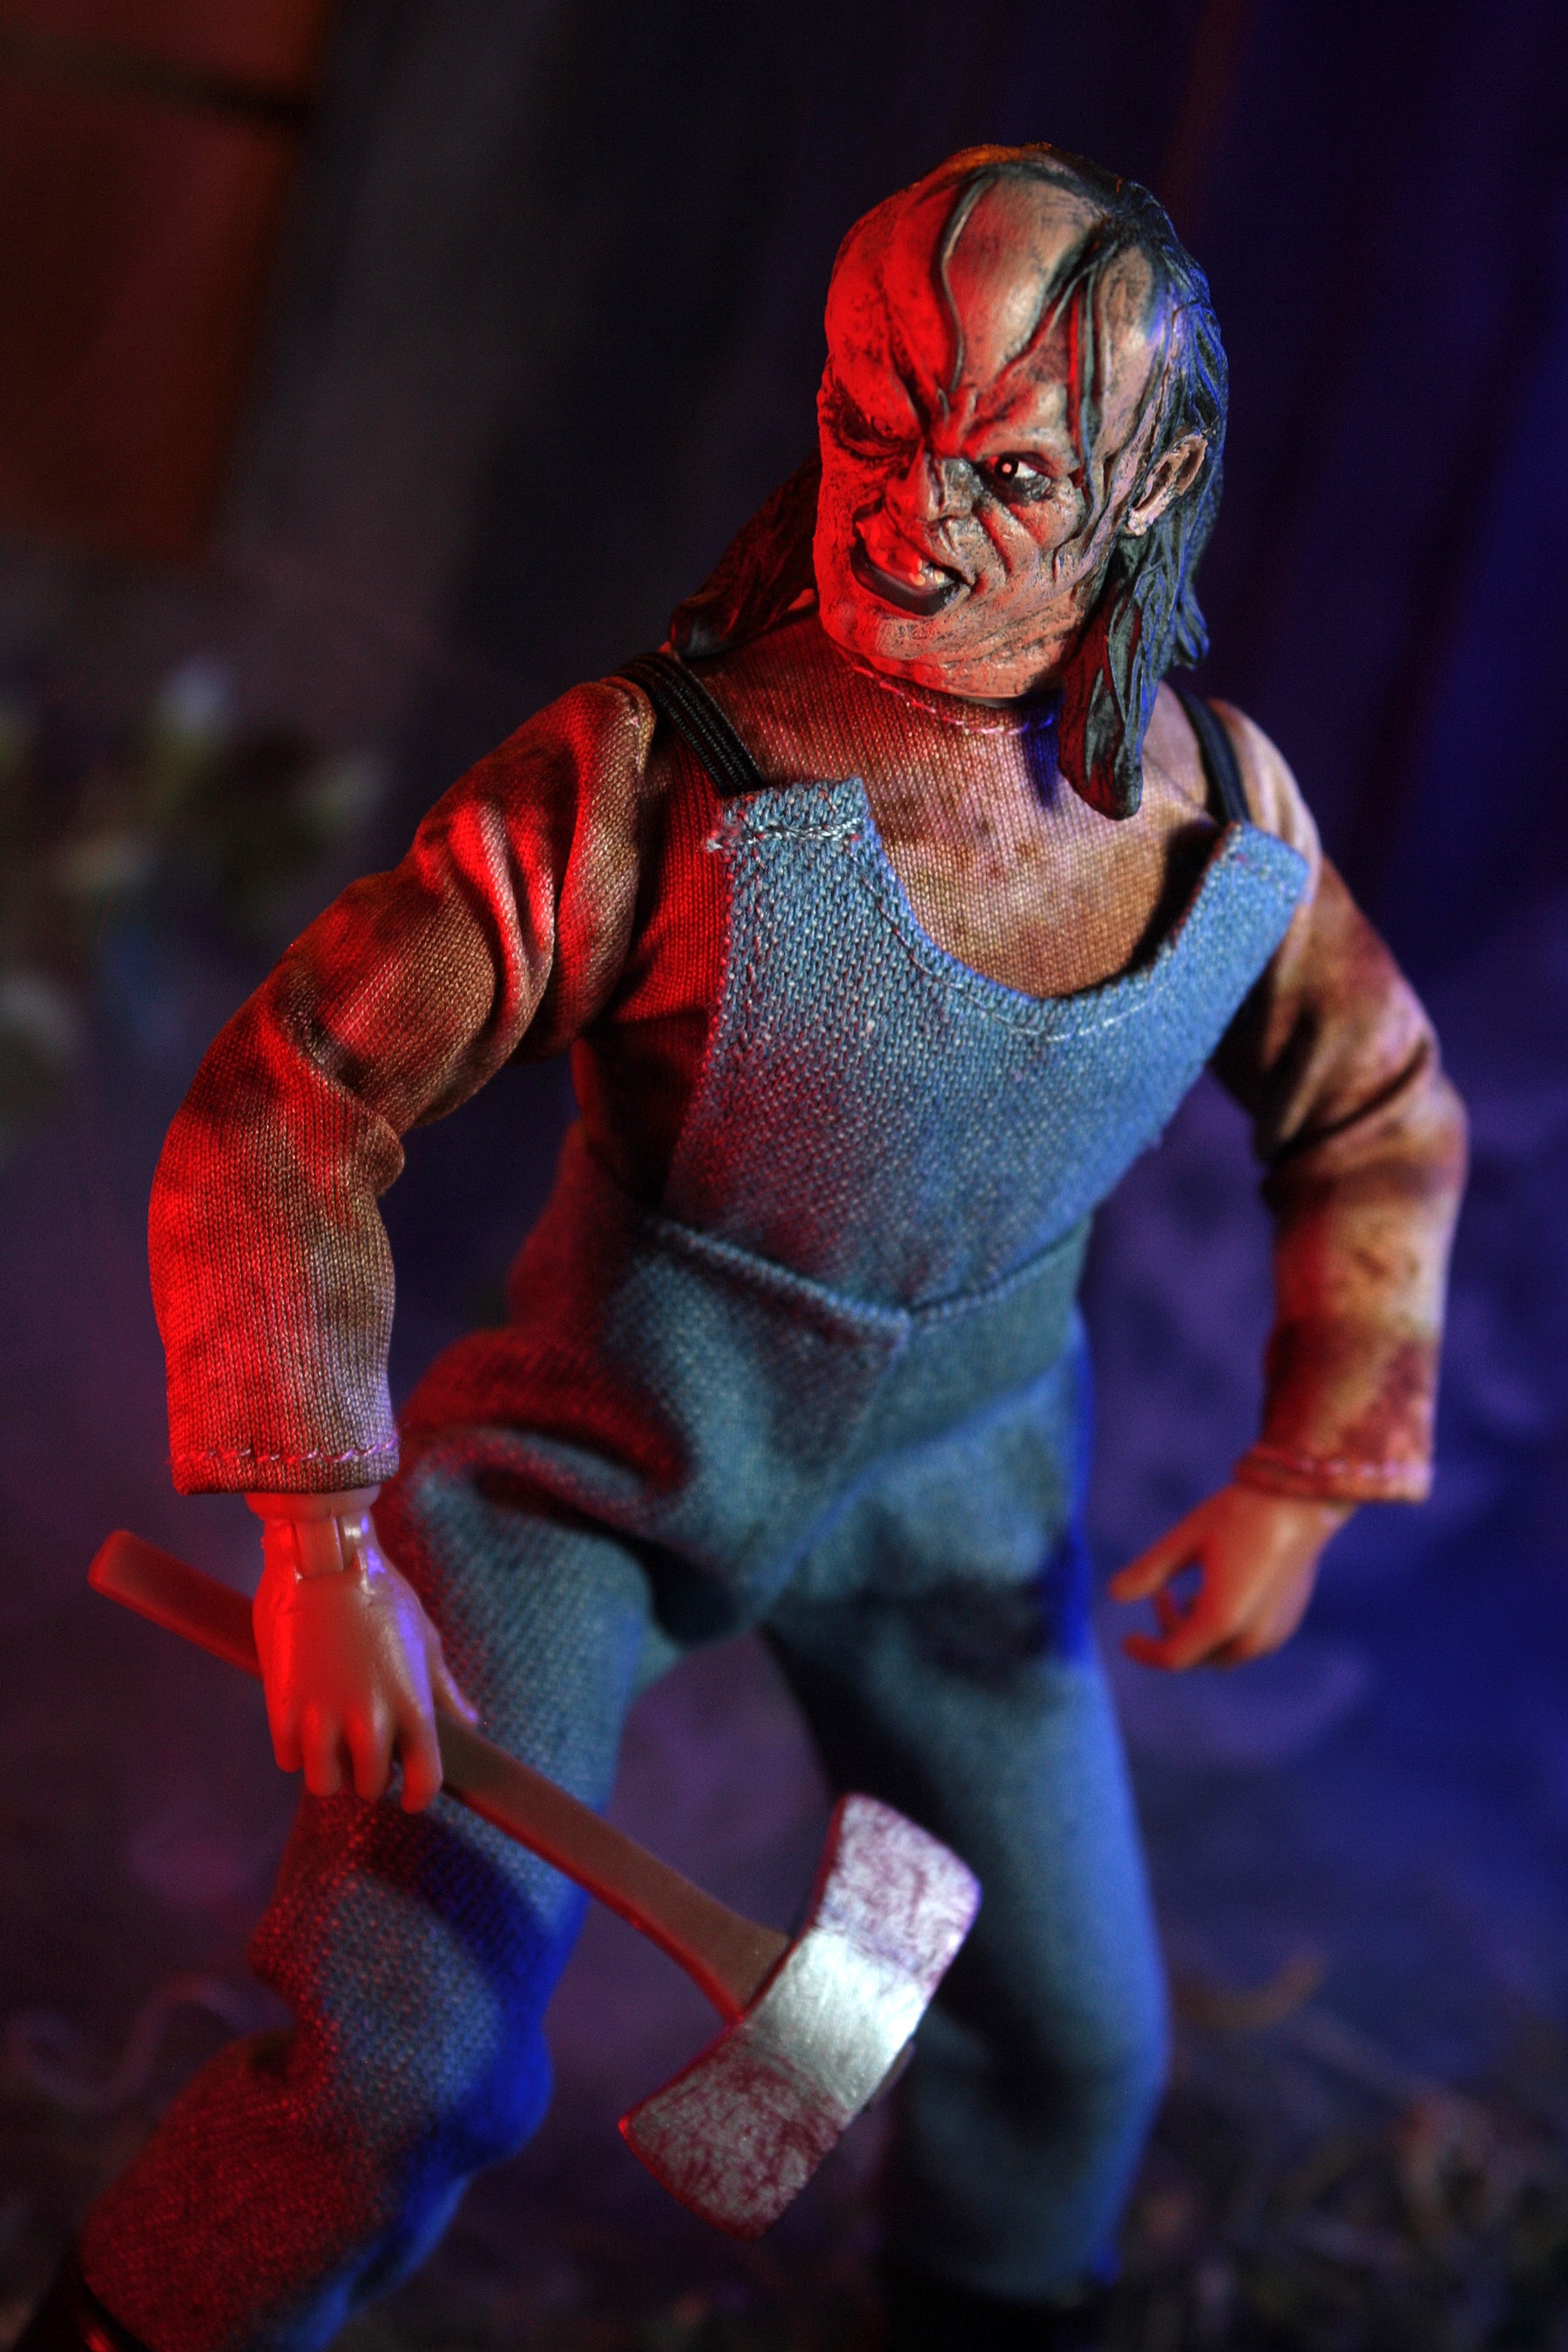 Mego Horror Wave 16 - Victor Crowley (Hatchet) 8" Action Figure